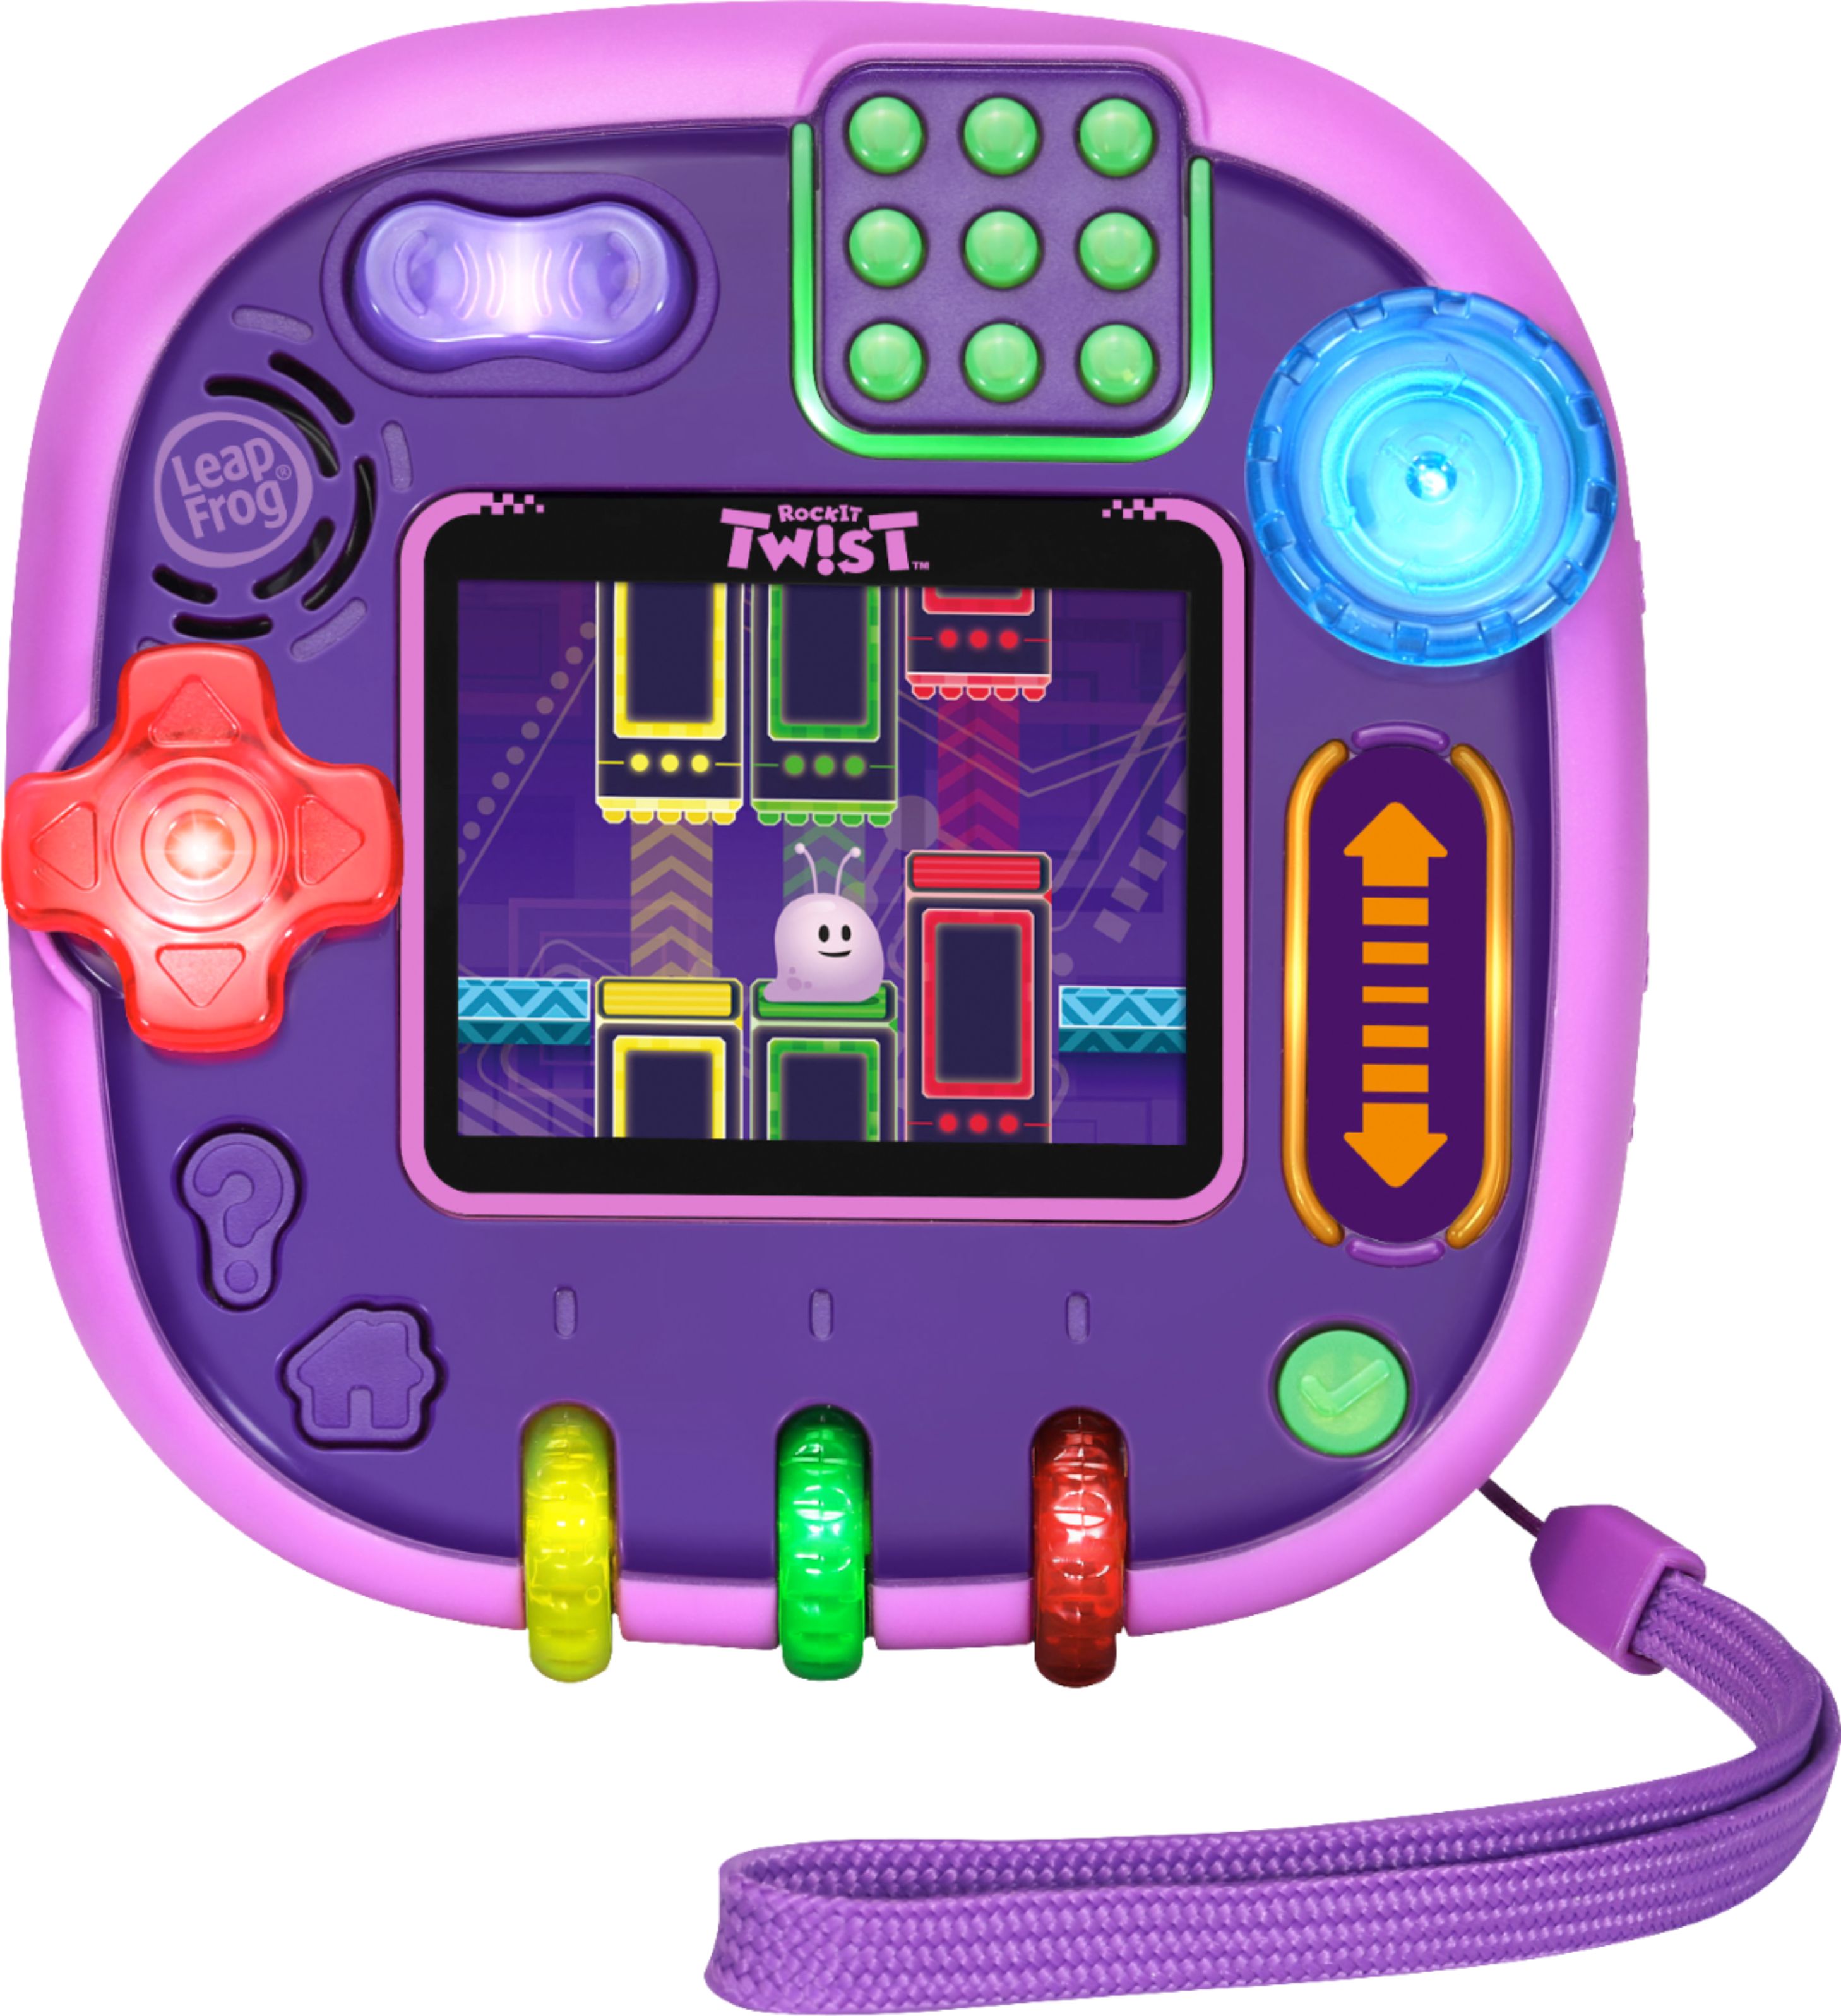 LeapFrog - RockIt Twist Handheld Gaming System - Purple